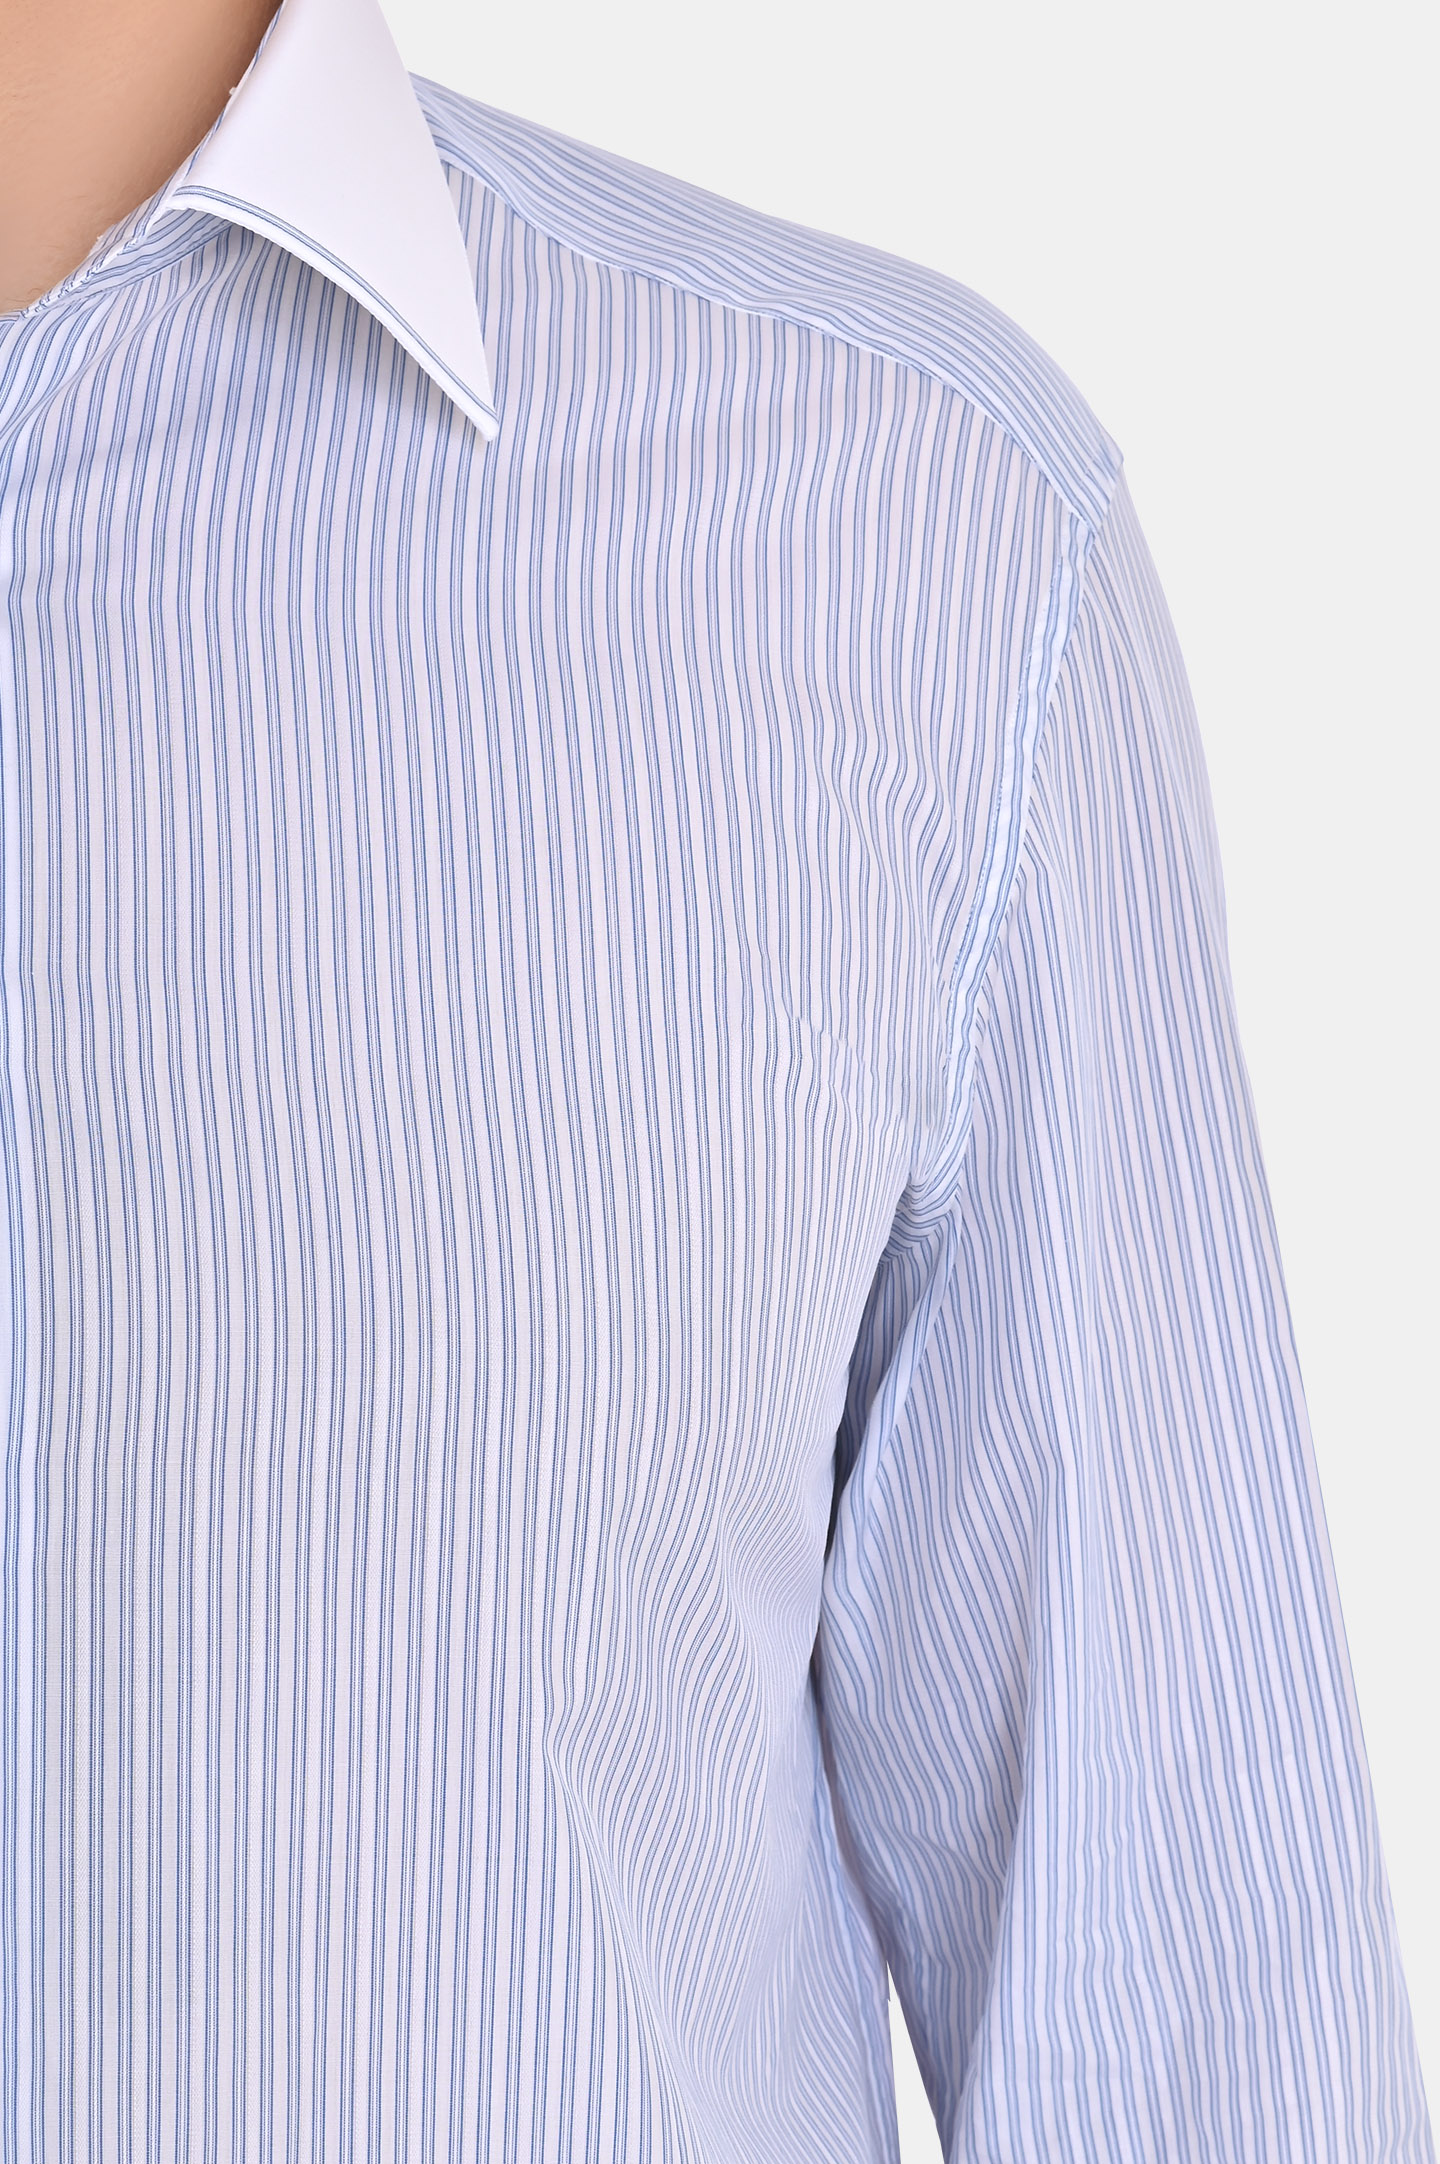 Рубашка STEFANO RICCI MC006726 R2553, цвет: Белый, Мужской